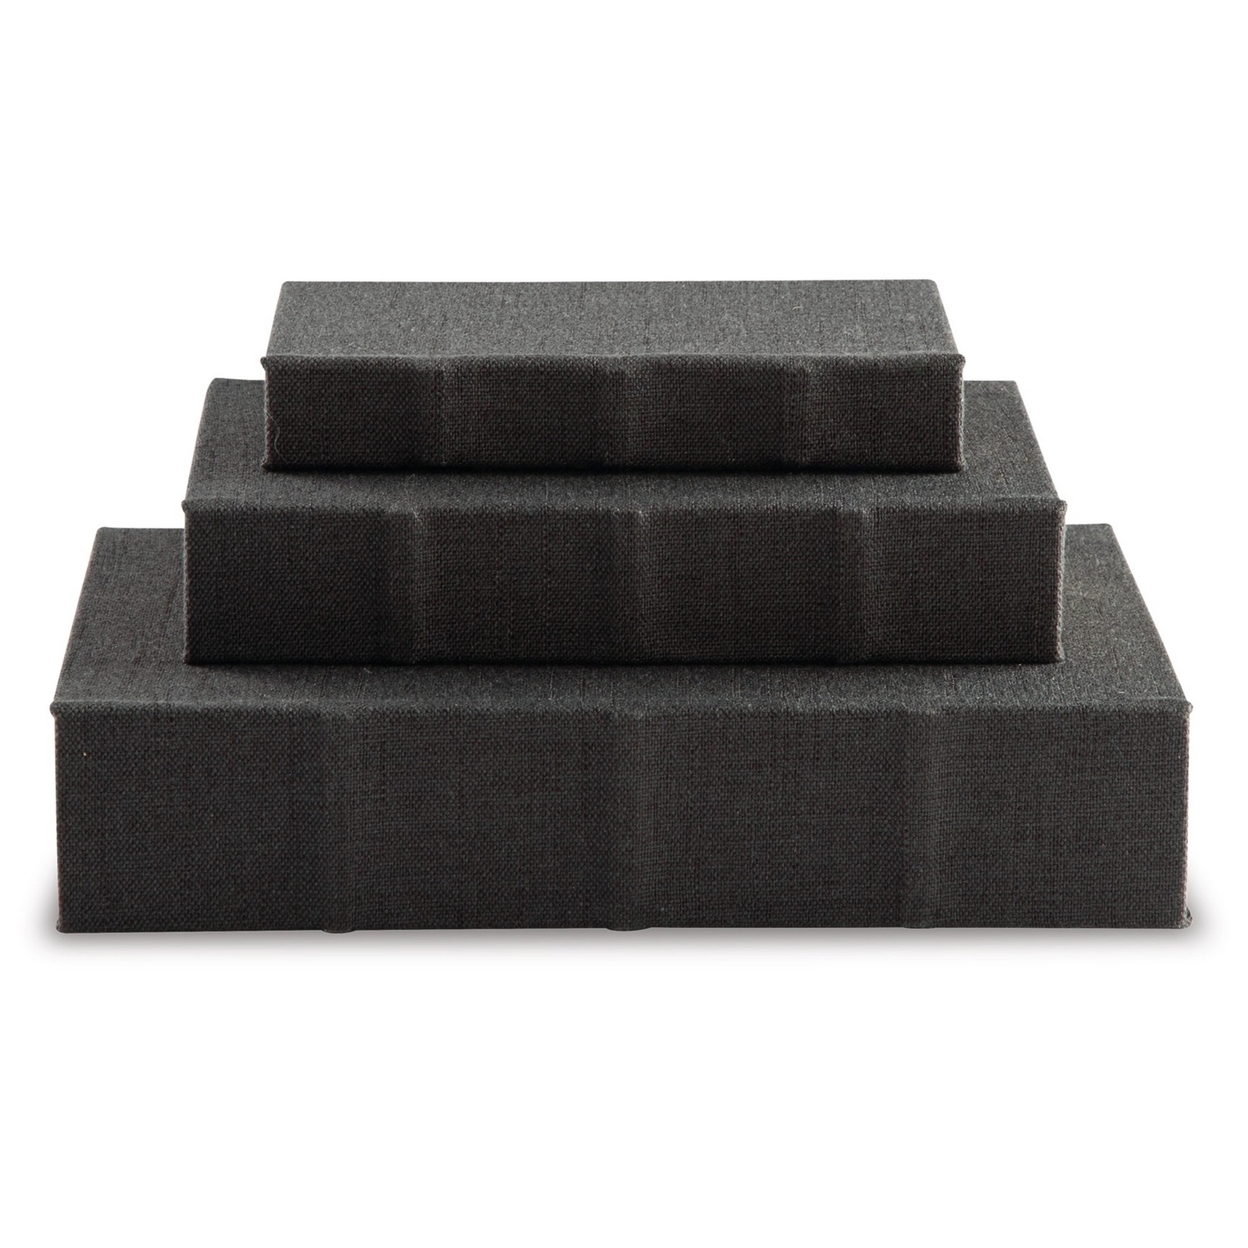 Set Of 3 Decorative Boxes With Black Velvet Lining, Nesting Book Design- Saltoro Sherpi